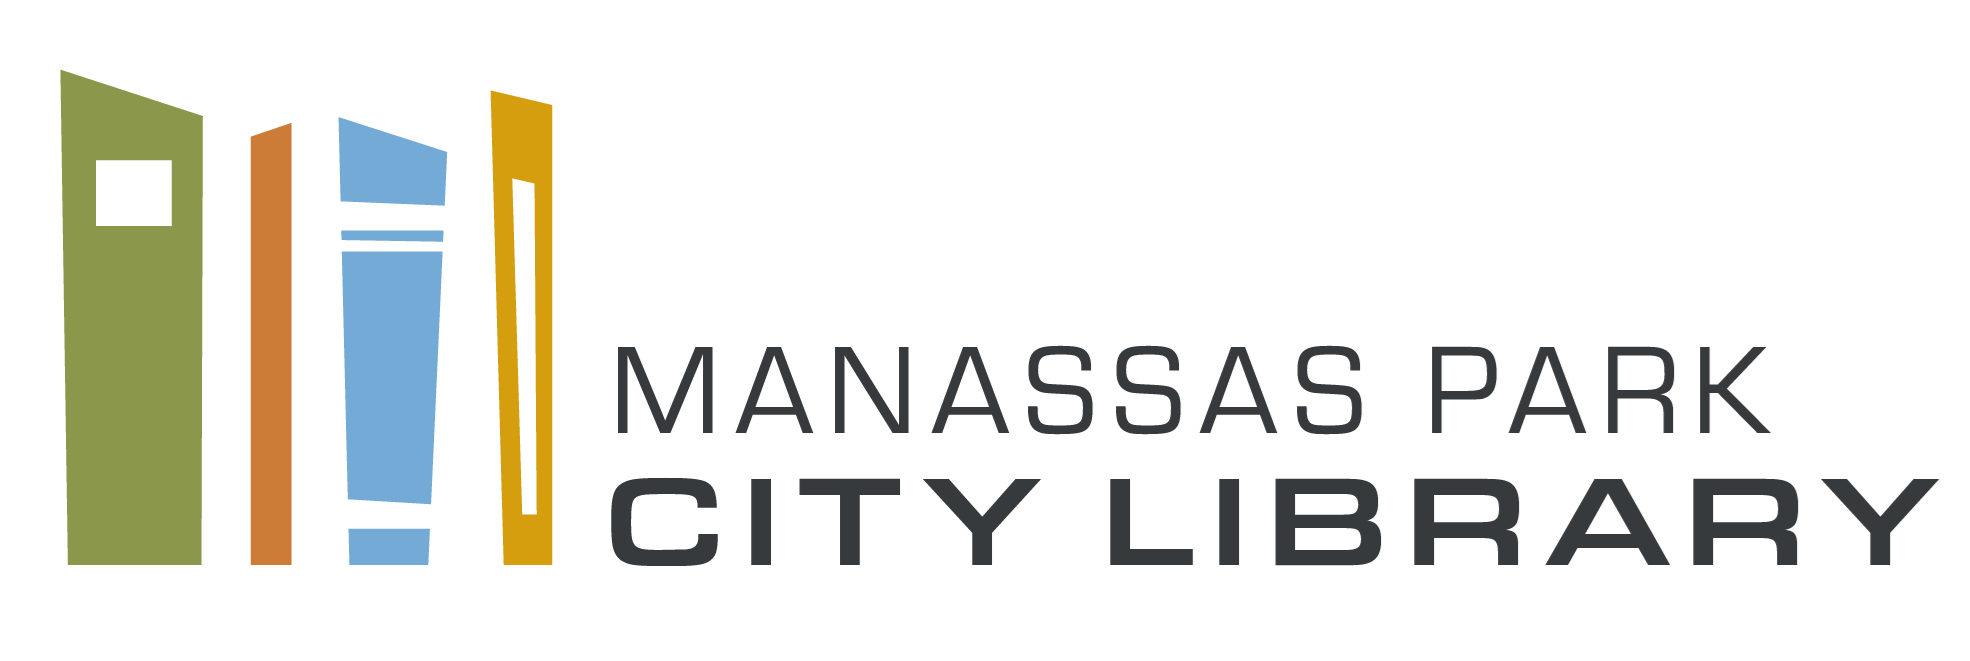 Manassas Park City Library